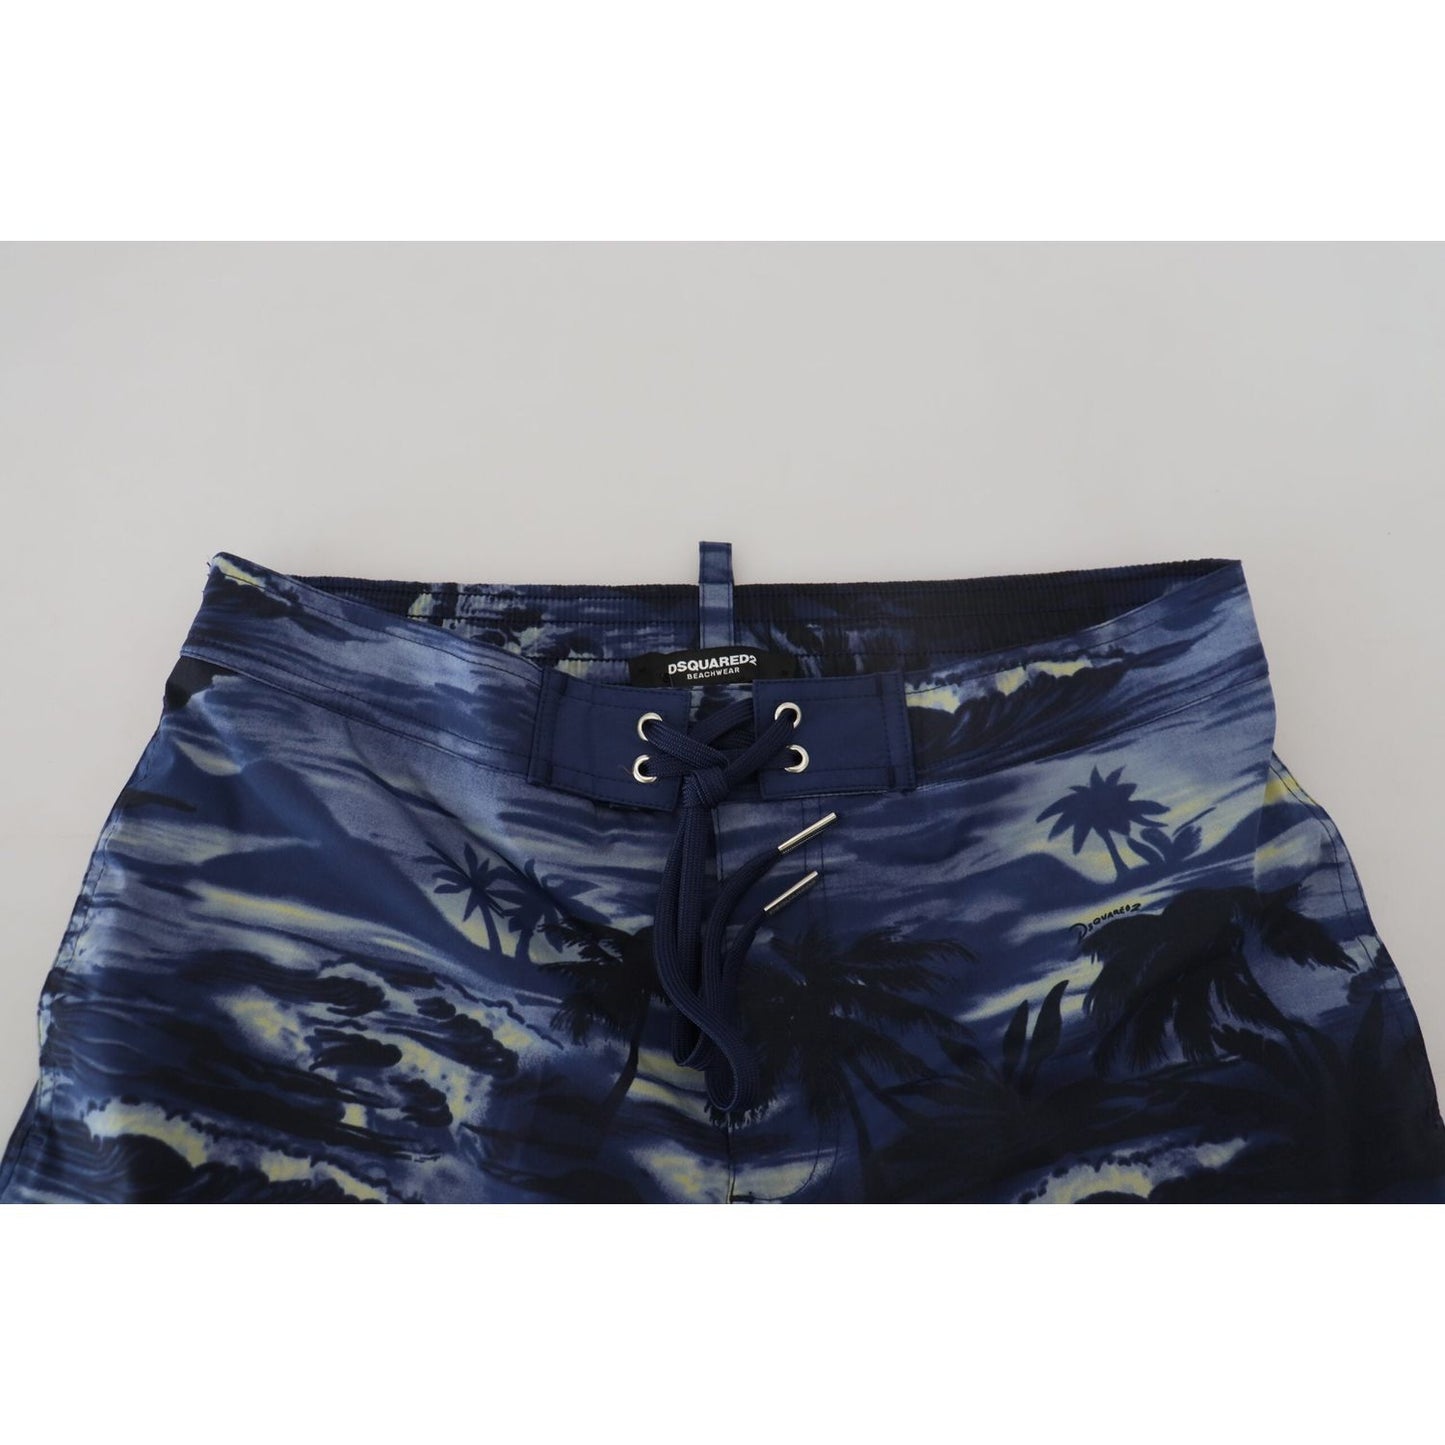 Dsquared² Tropical Wave Design Swim Shorts blue-tropical-wave-design-beachwear-shorts-swimwear IMG_6135-scaled-7123076d-7c8.jpg